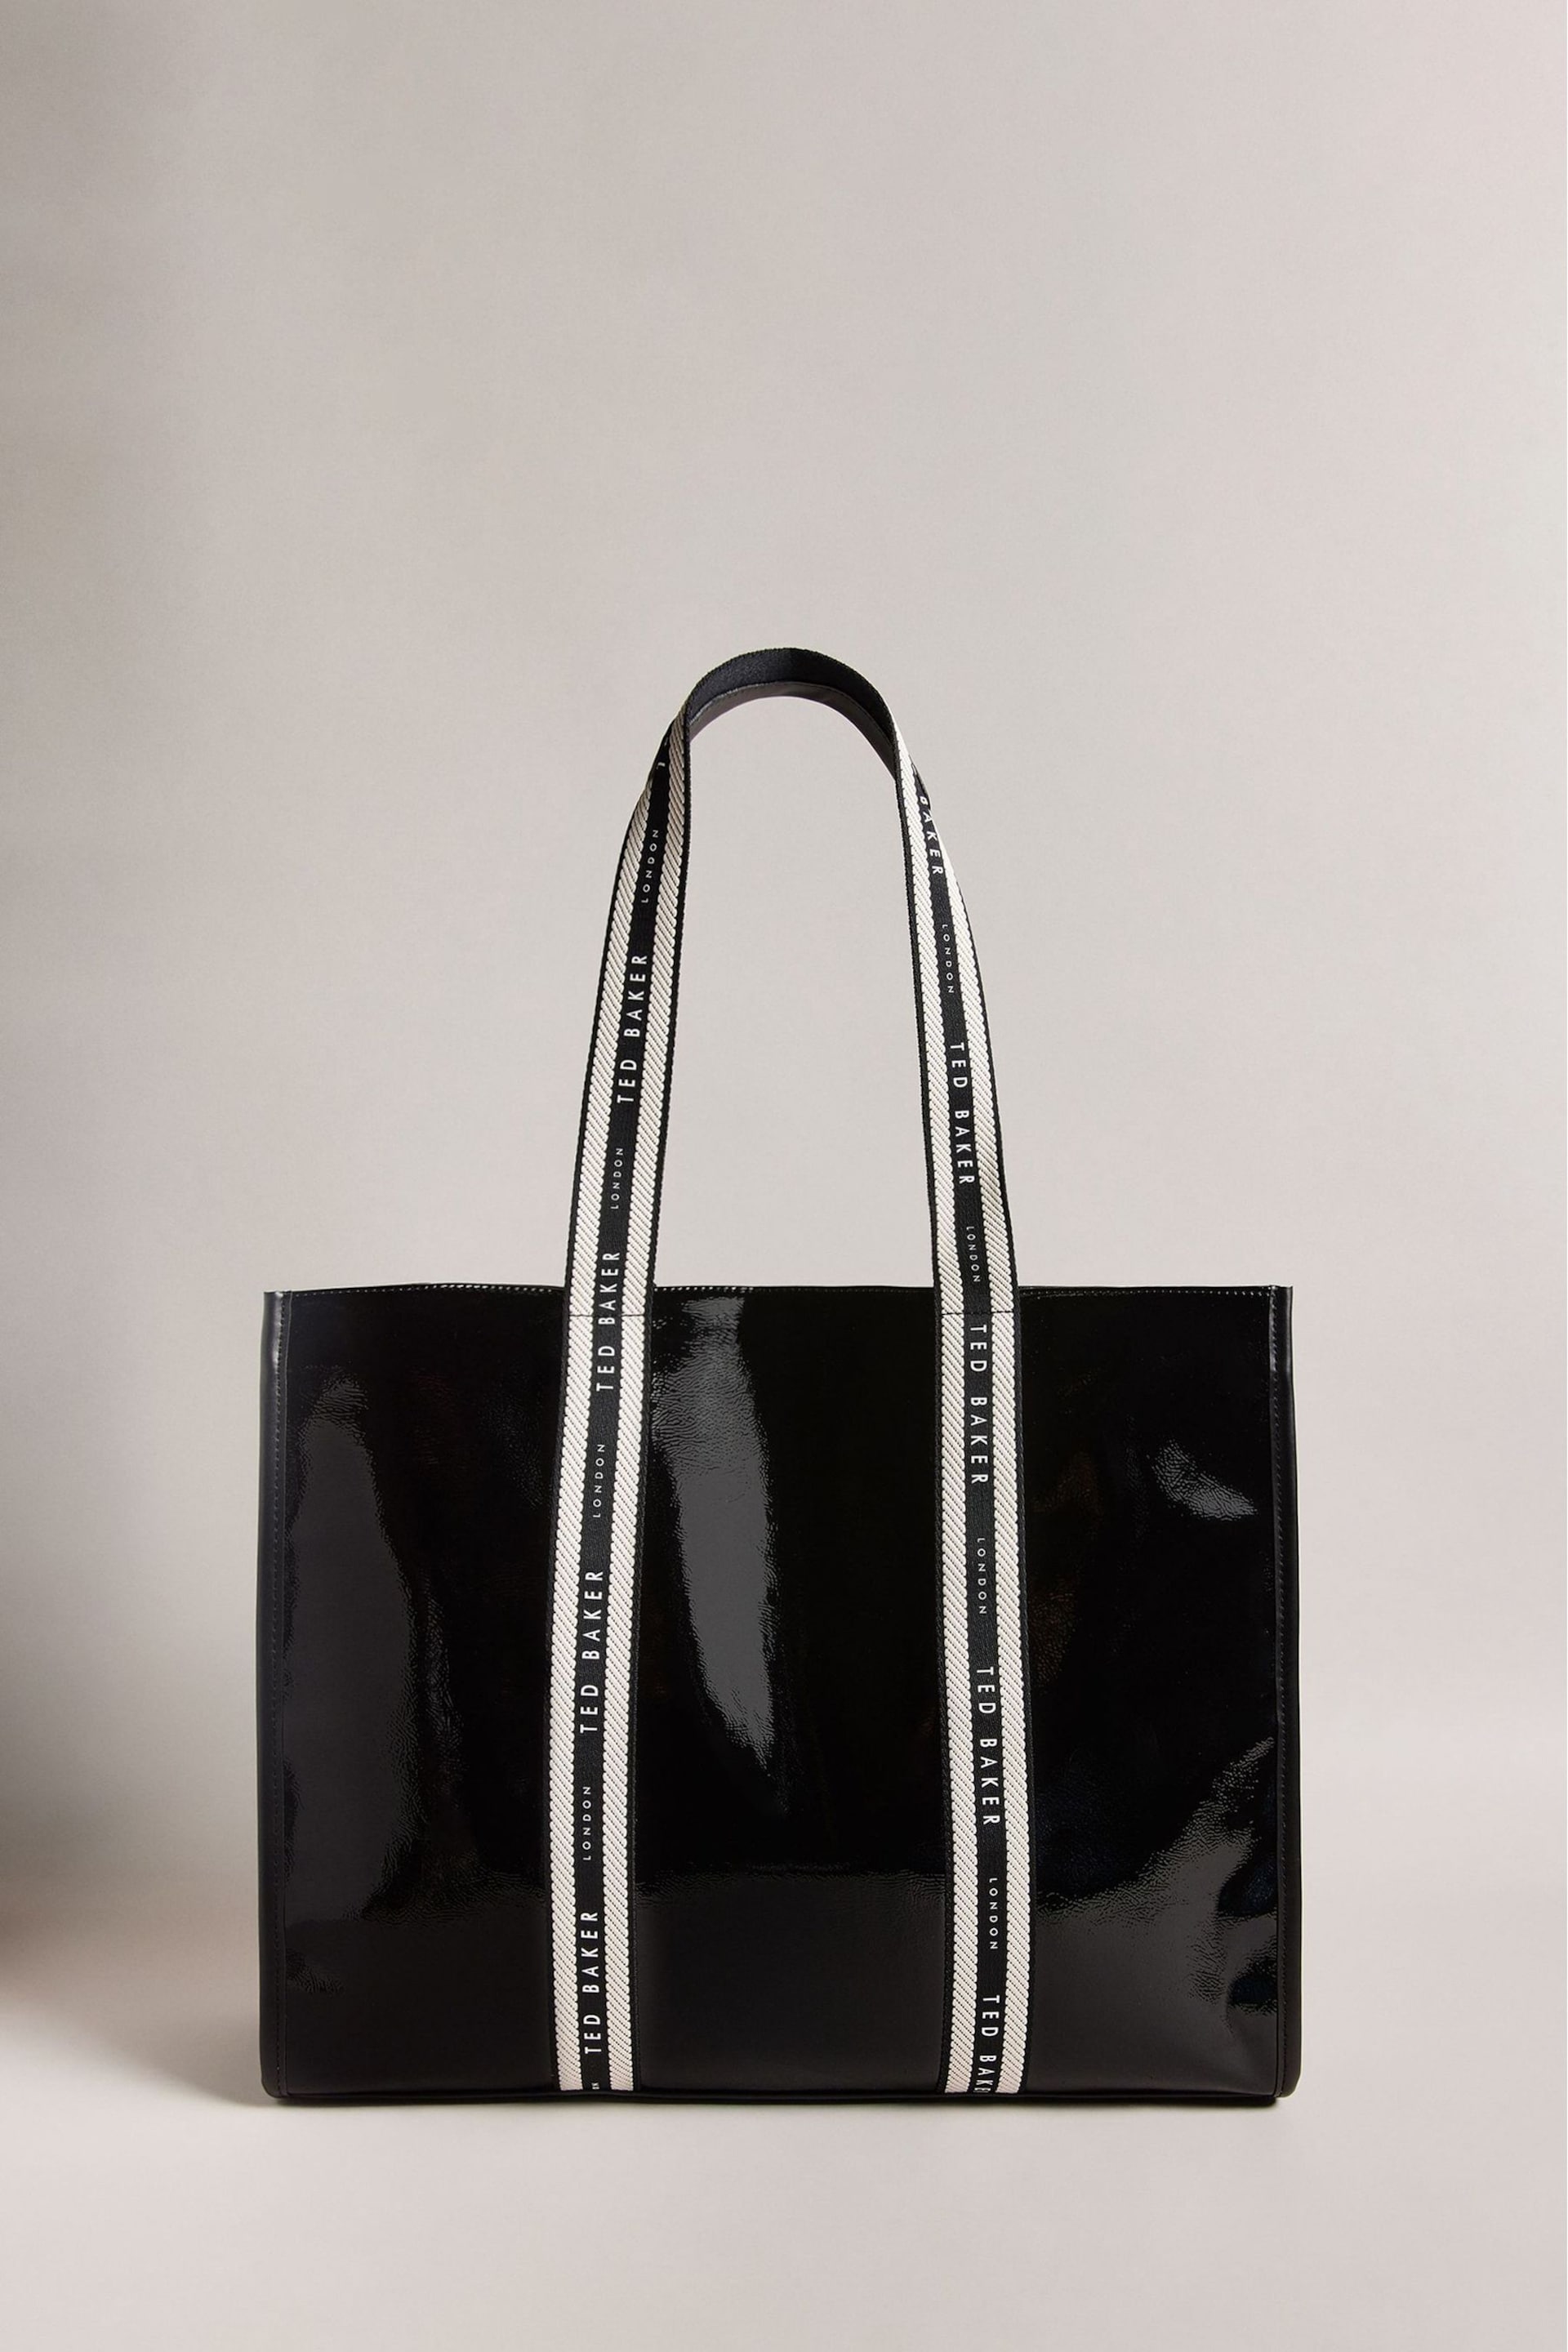 Ted Baker Black Large Branded Webbing Celinie Faux Leather Tote Bag - Image 1 of 5